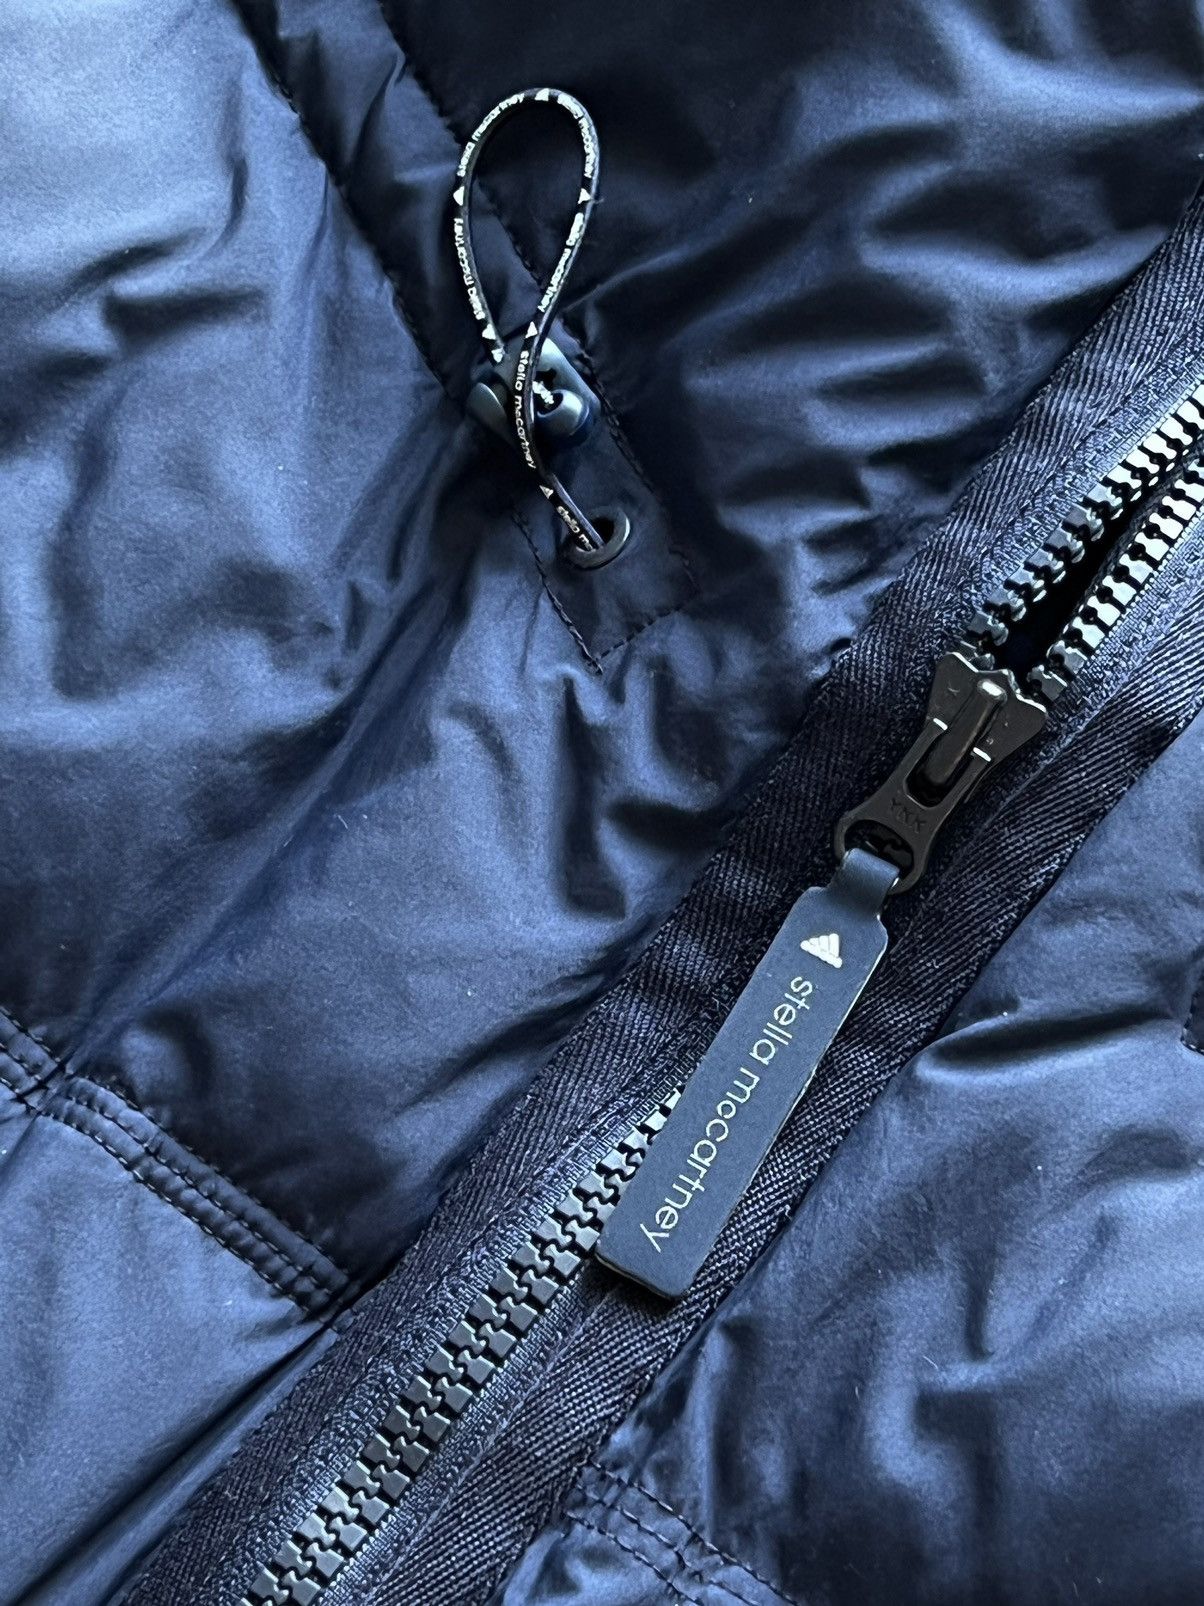 Adidas Adidas x Stella McCartney Oversized Puffer Jacket Sample 36 Size US M / EU 48-50 / 2 - 6 Thumbnail